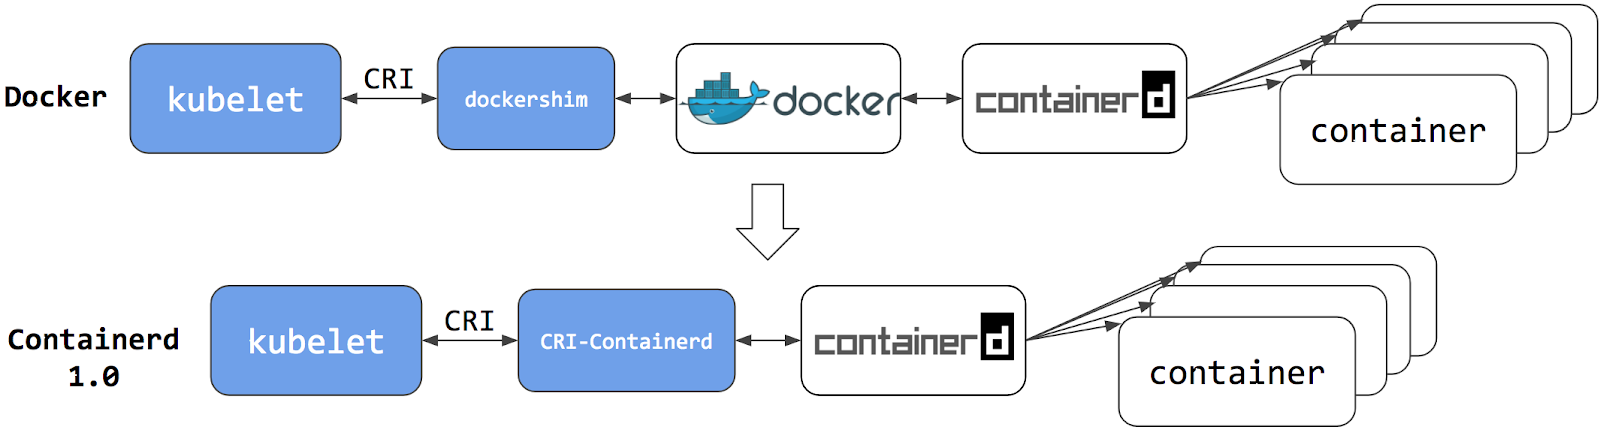 Dockershim vs. CRI з Containerd